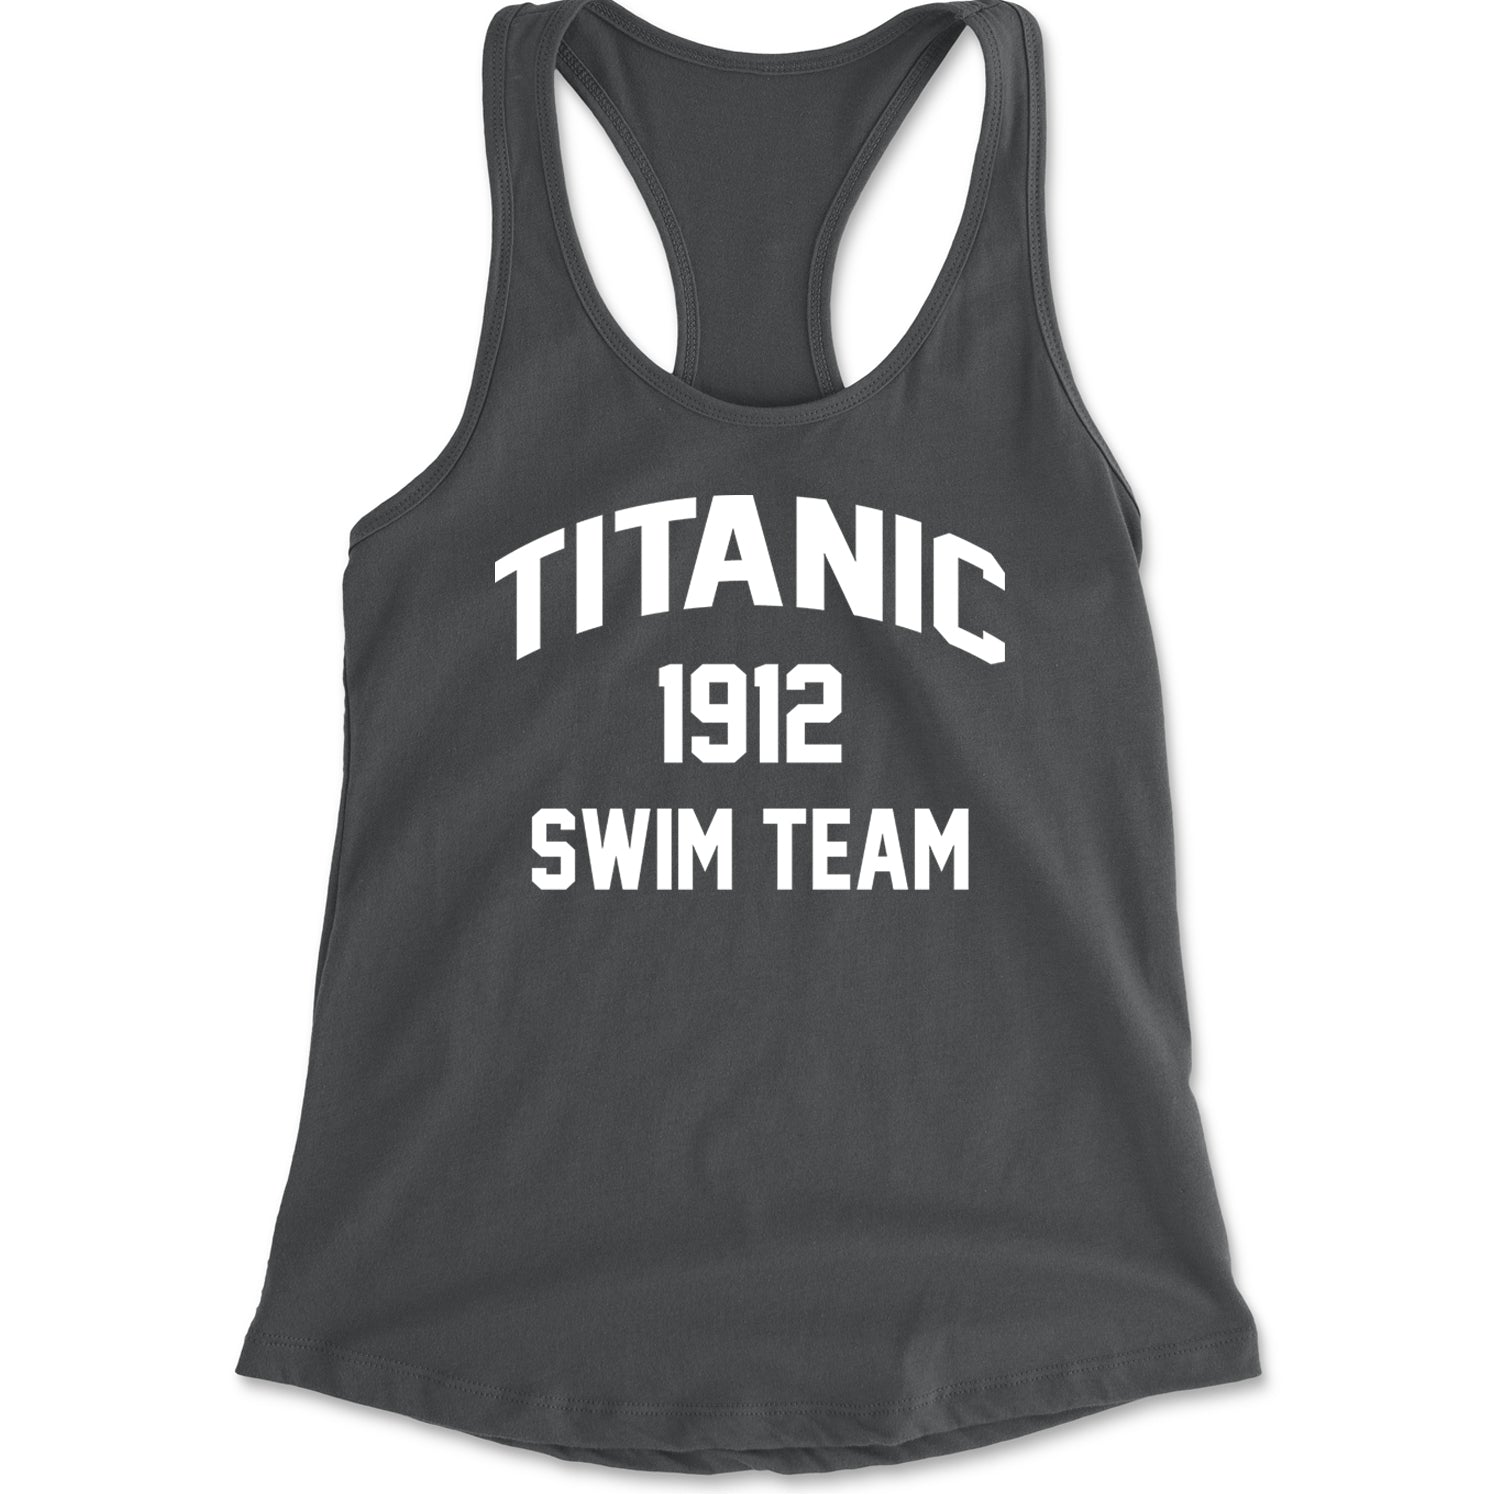 Titanic Swim Team 1912 Funny Cruise Racerback Tank Top for Women Charcoal Grey